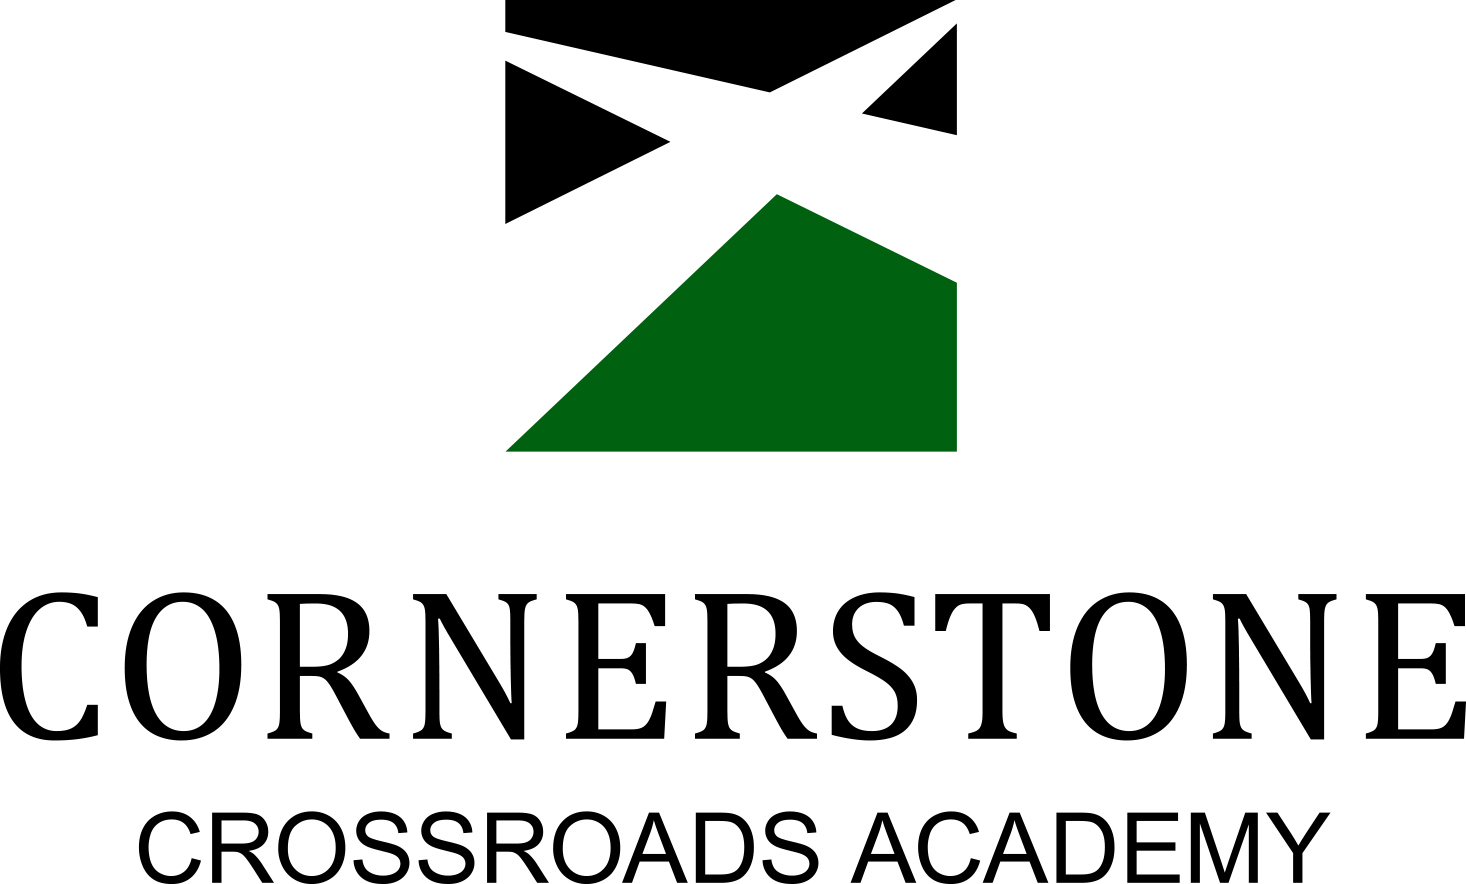 Cornerstone Crossroads Academy | Social Impact Architects